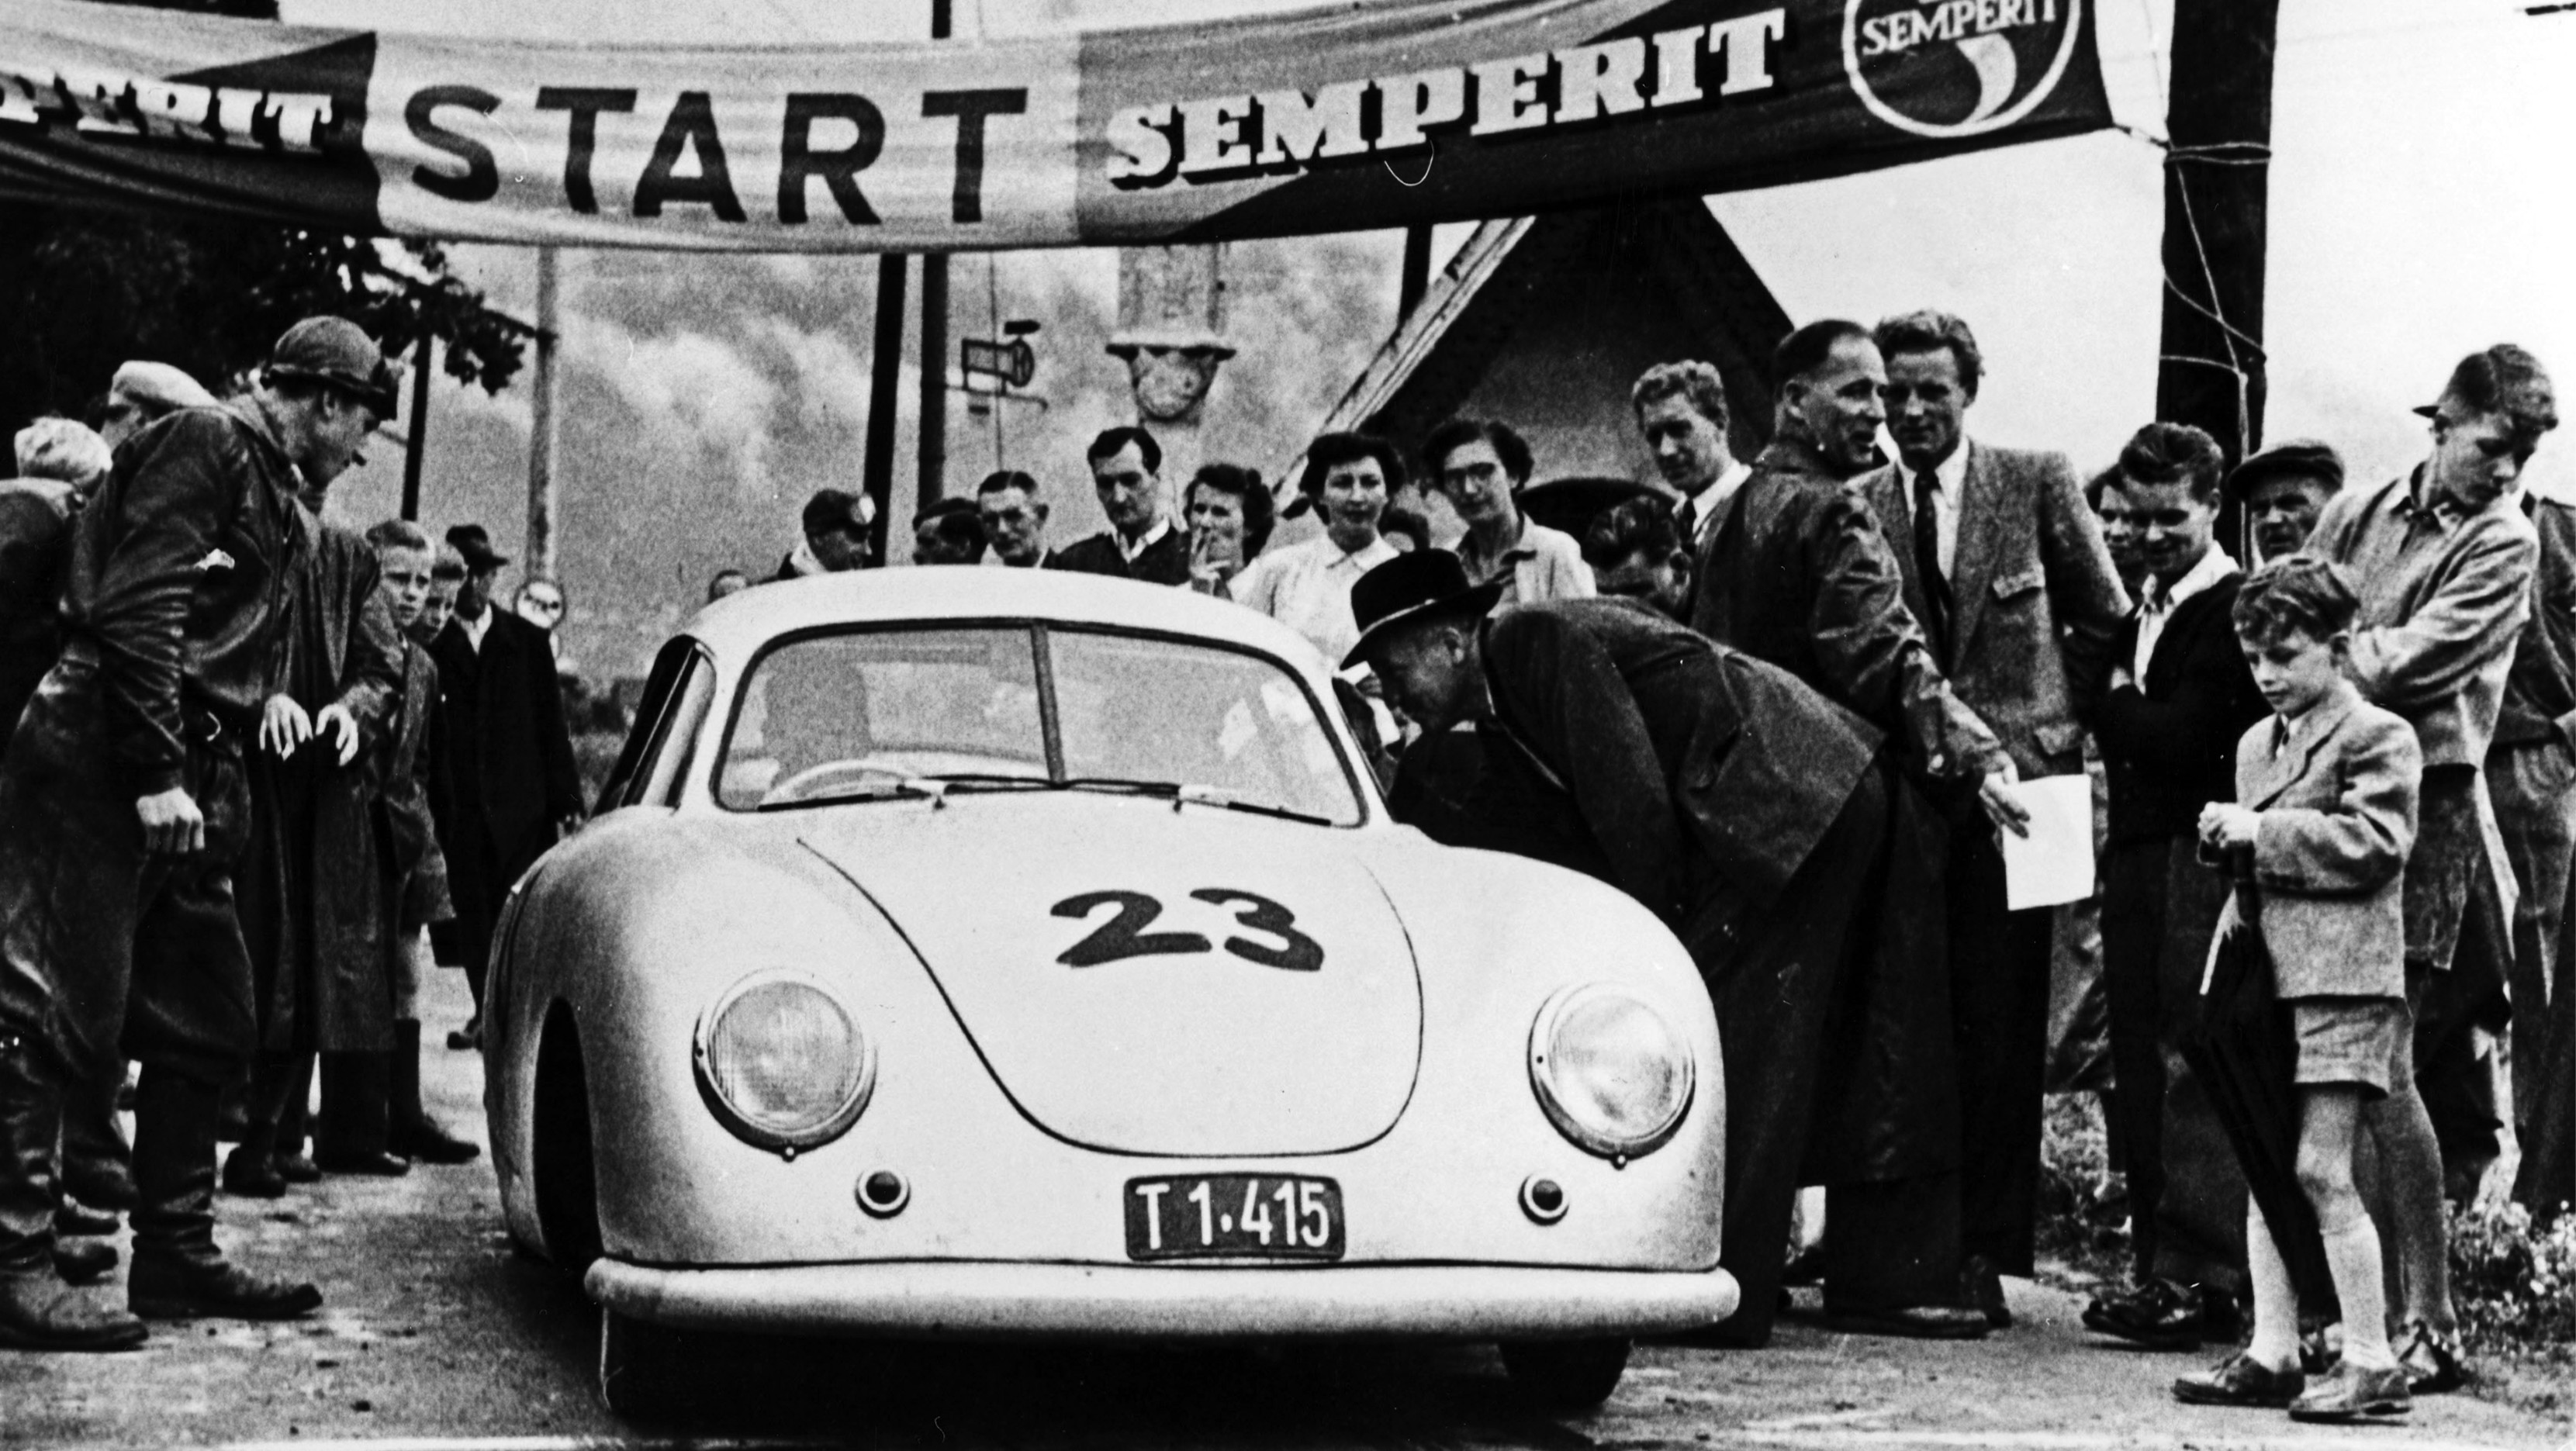 Mathe's Porsche 356